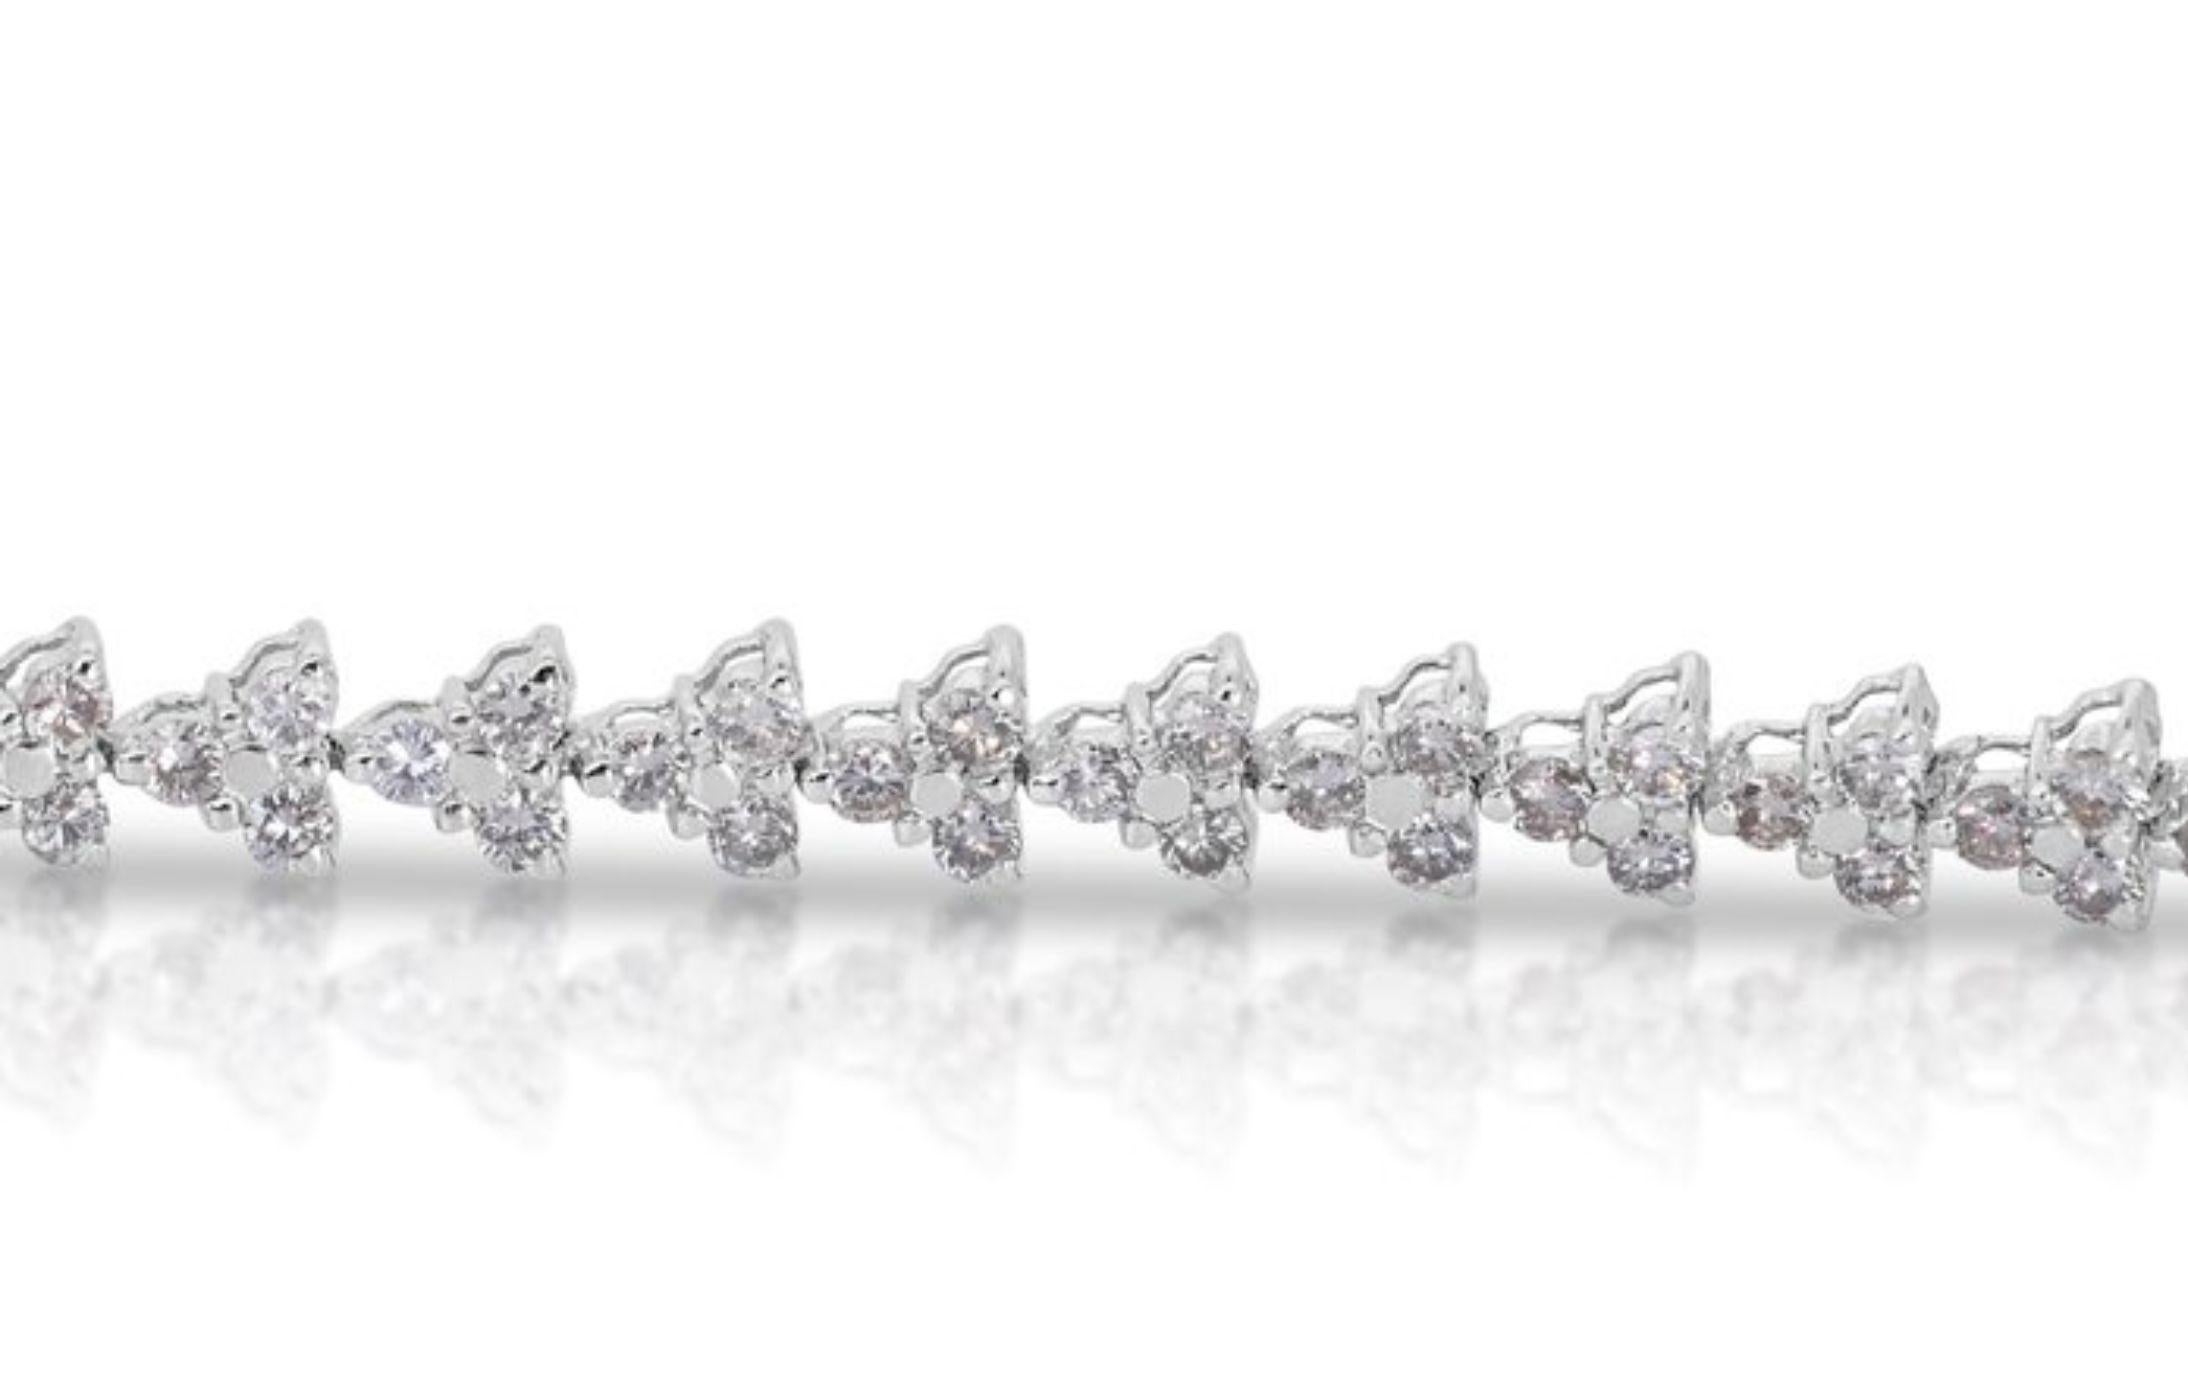 Exquisite 3.75ct Round Diamond Bracelet set in 14K White Gold For Sale 4